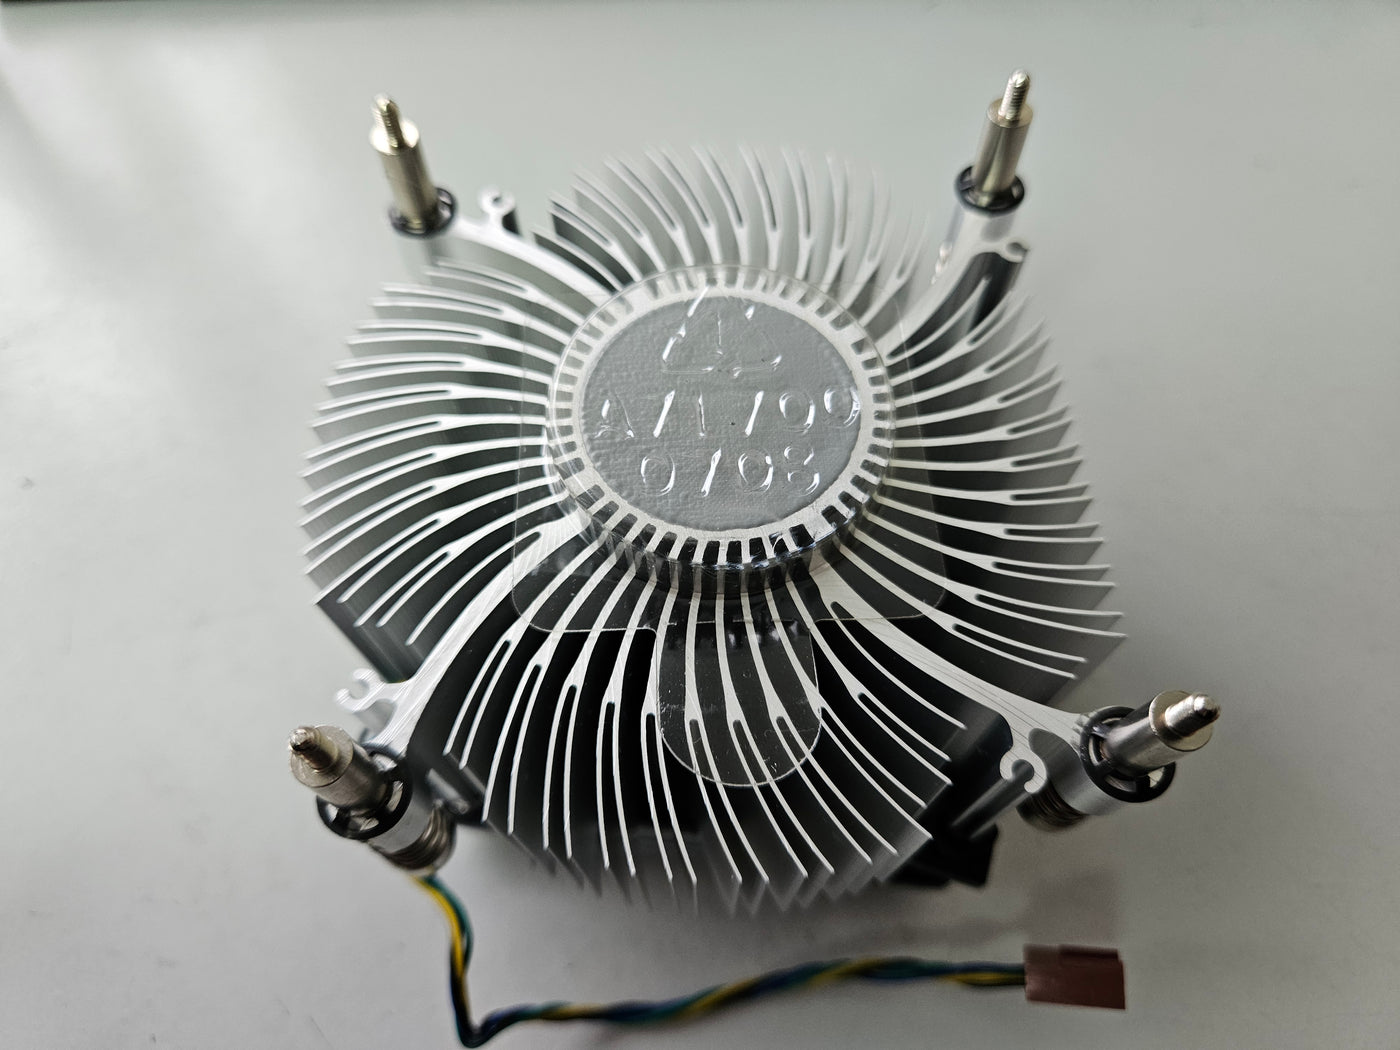 Lenovo Heatsink And Fan Assembly for ThinkServer TD340 ( 03X4337 31051530 ) NOB